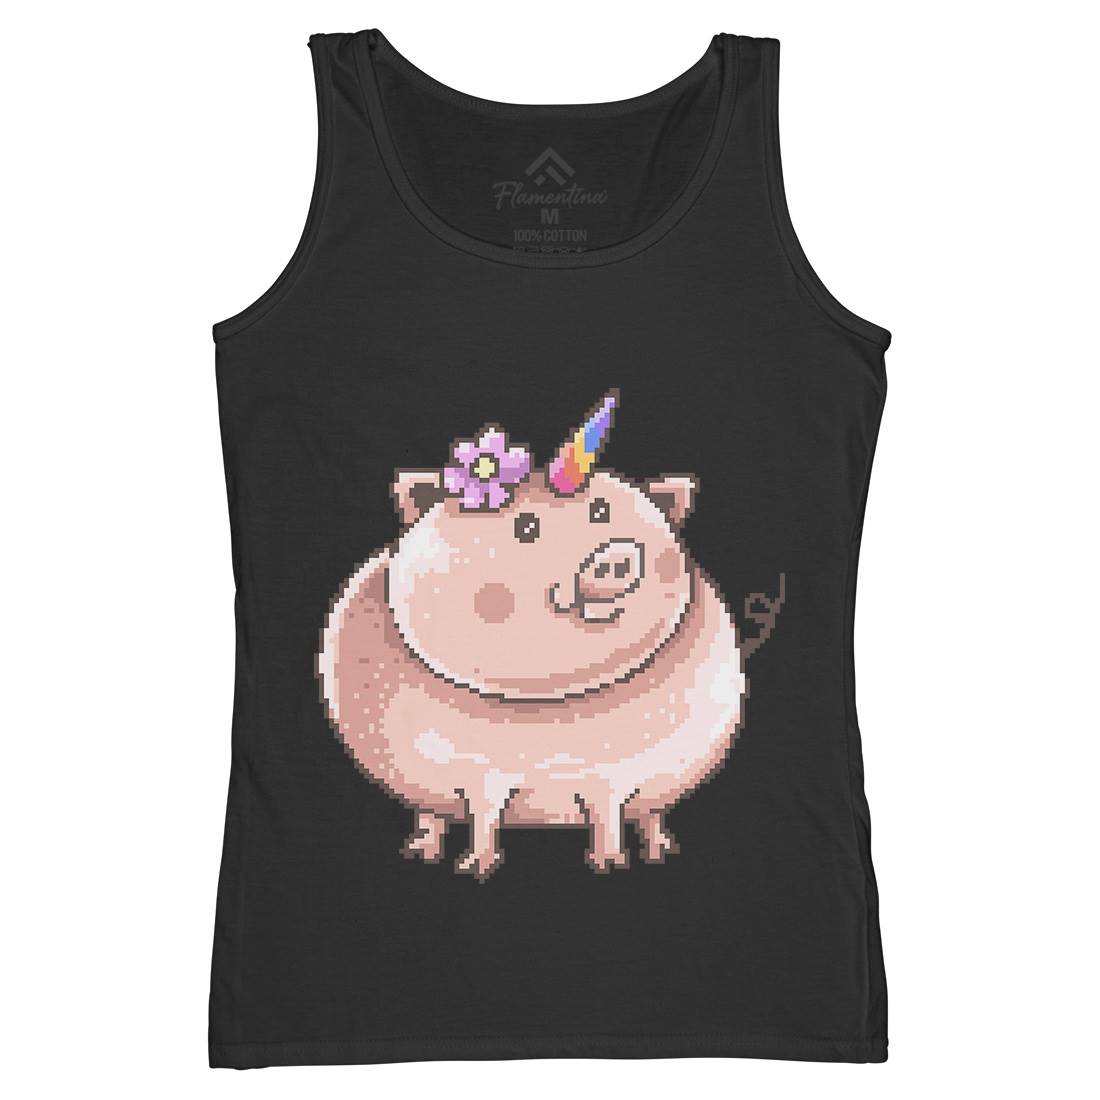 Piggycorn Womens Organic Tank Top Vest Animals B946